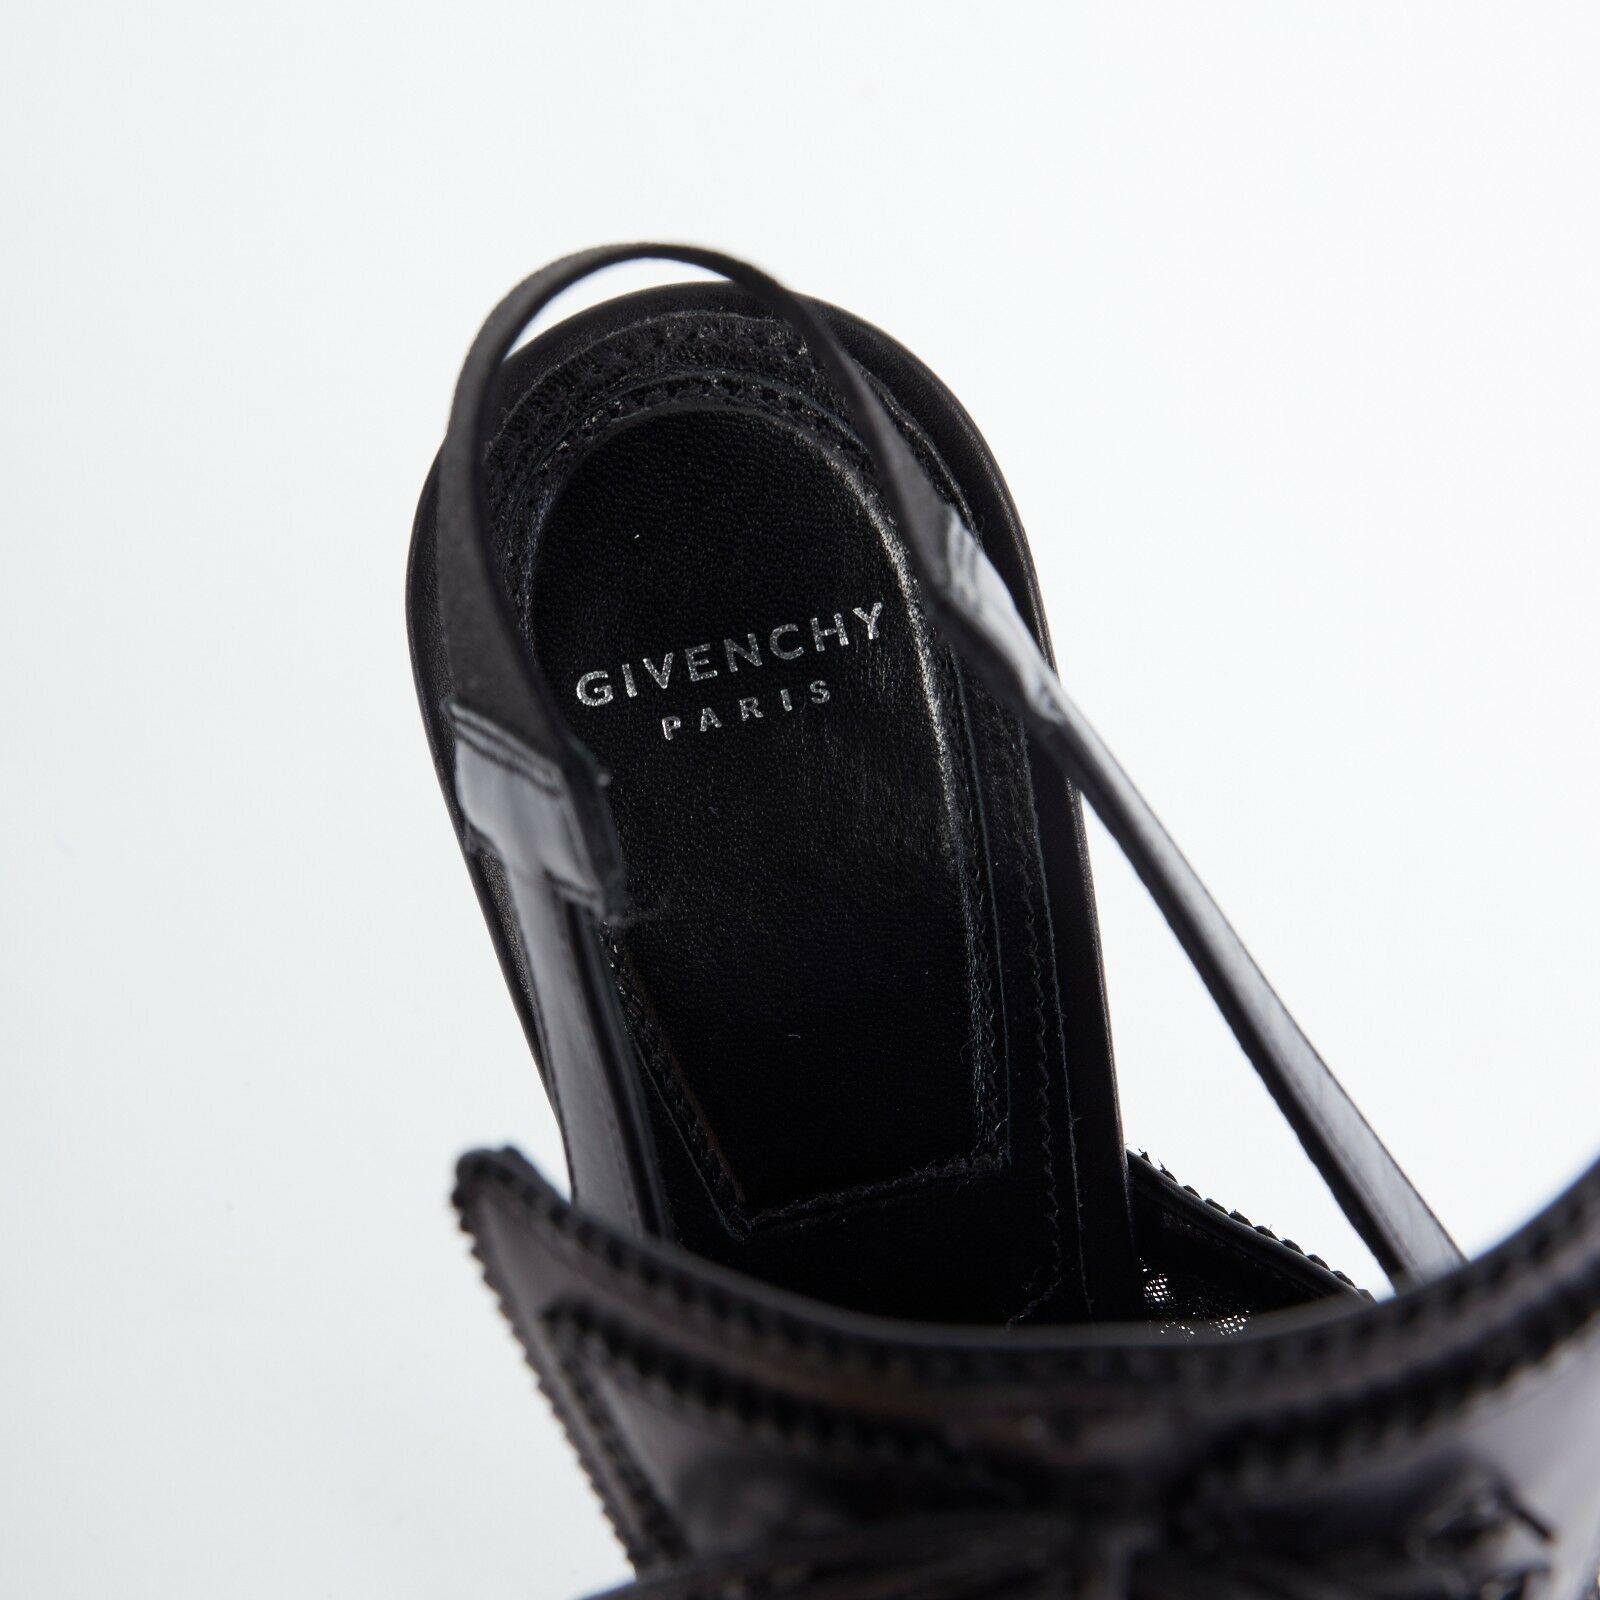 runway GIVENCHY TISCI black lace brogue pointy sling back kitten heel shoes EU38 2